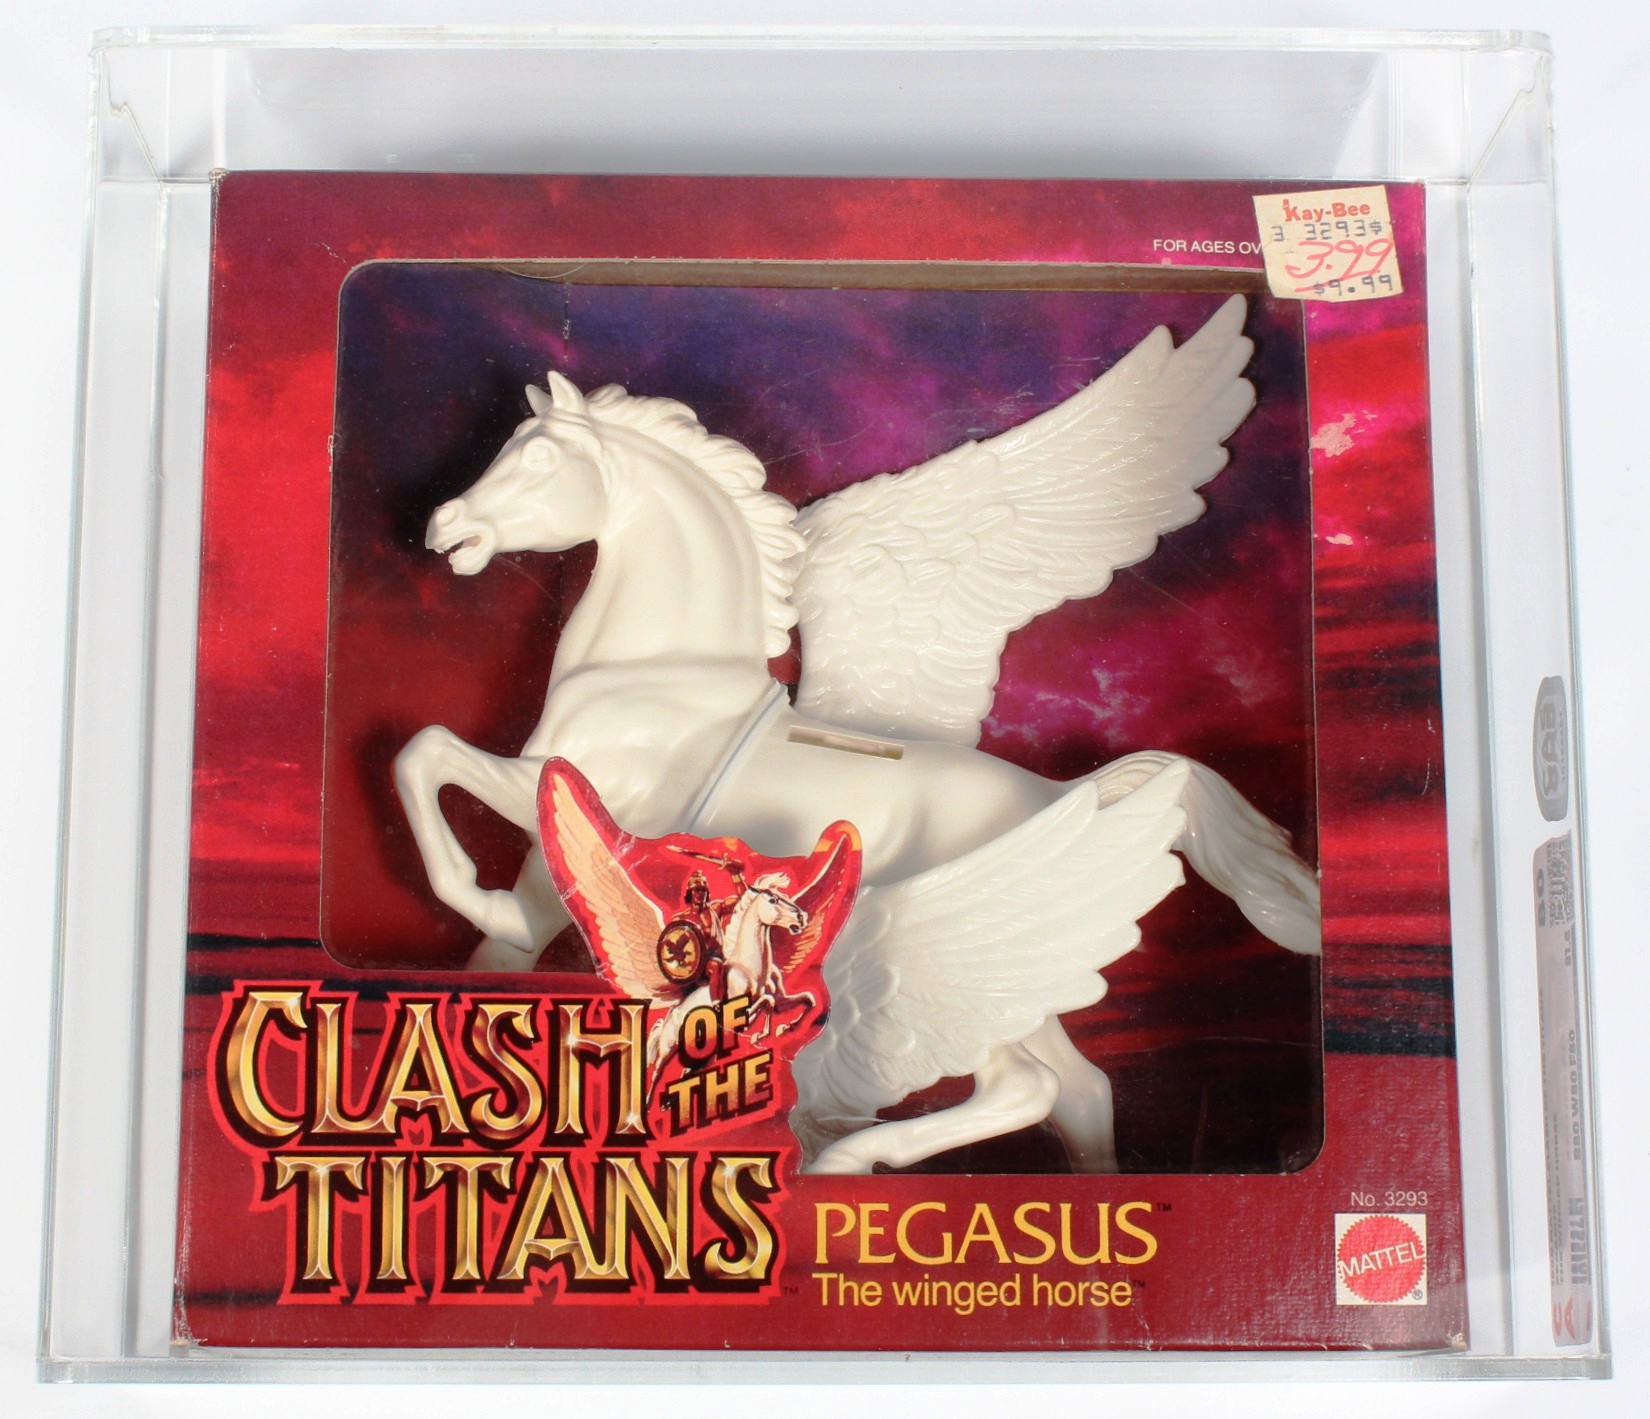 1980 Mattel Clash of the Titans Boxed Action Figure - Kraken Sea Monster